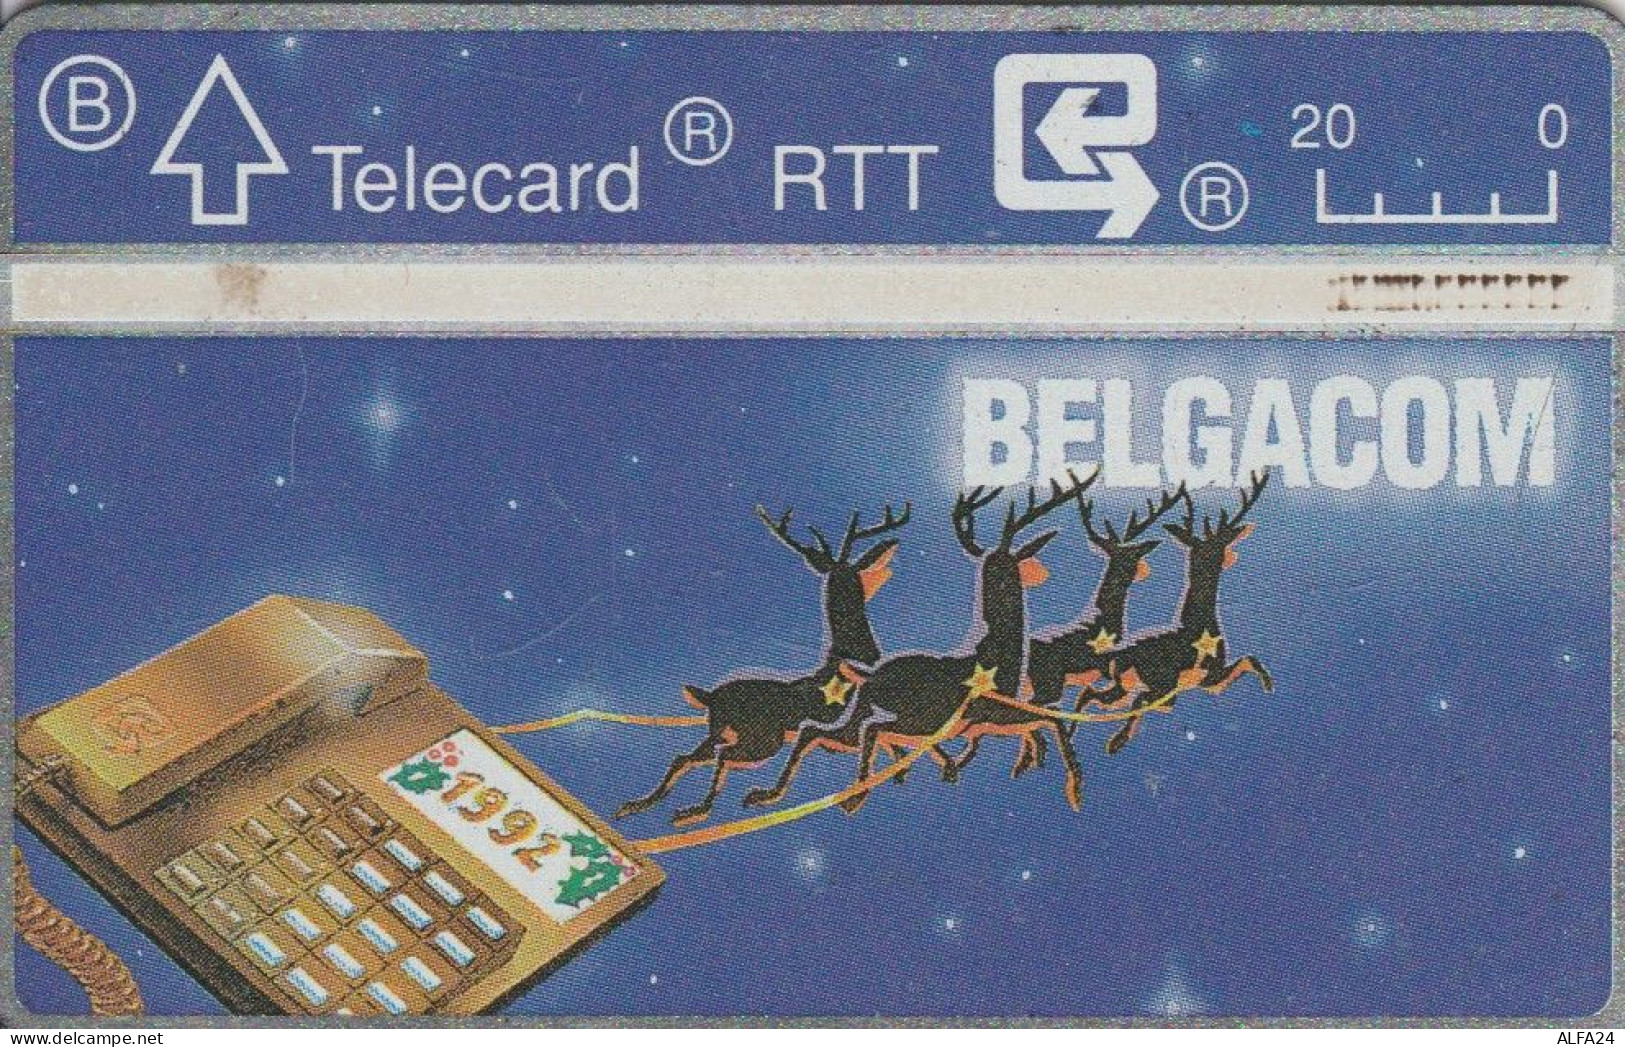 PHONE CARD BELGIO LANDIS (CK5803 - Senza Chip